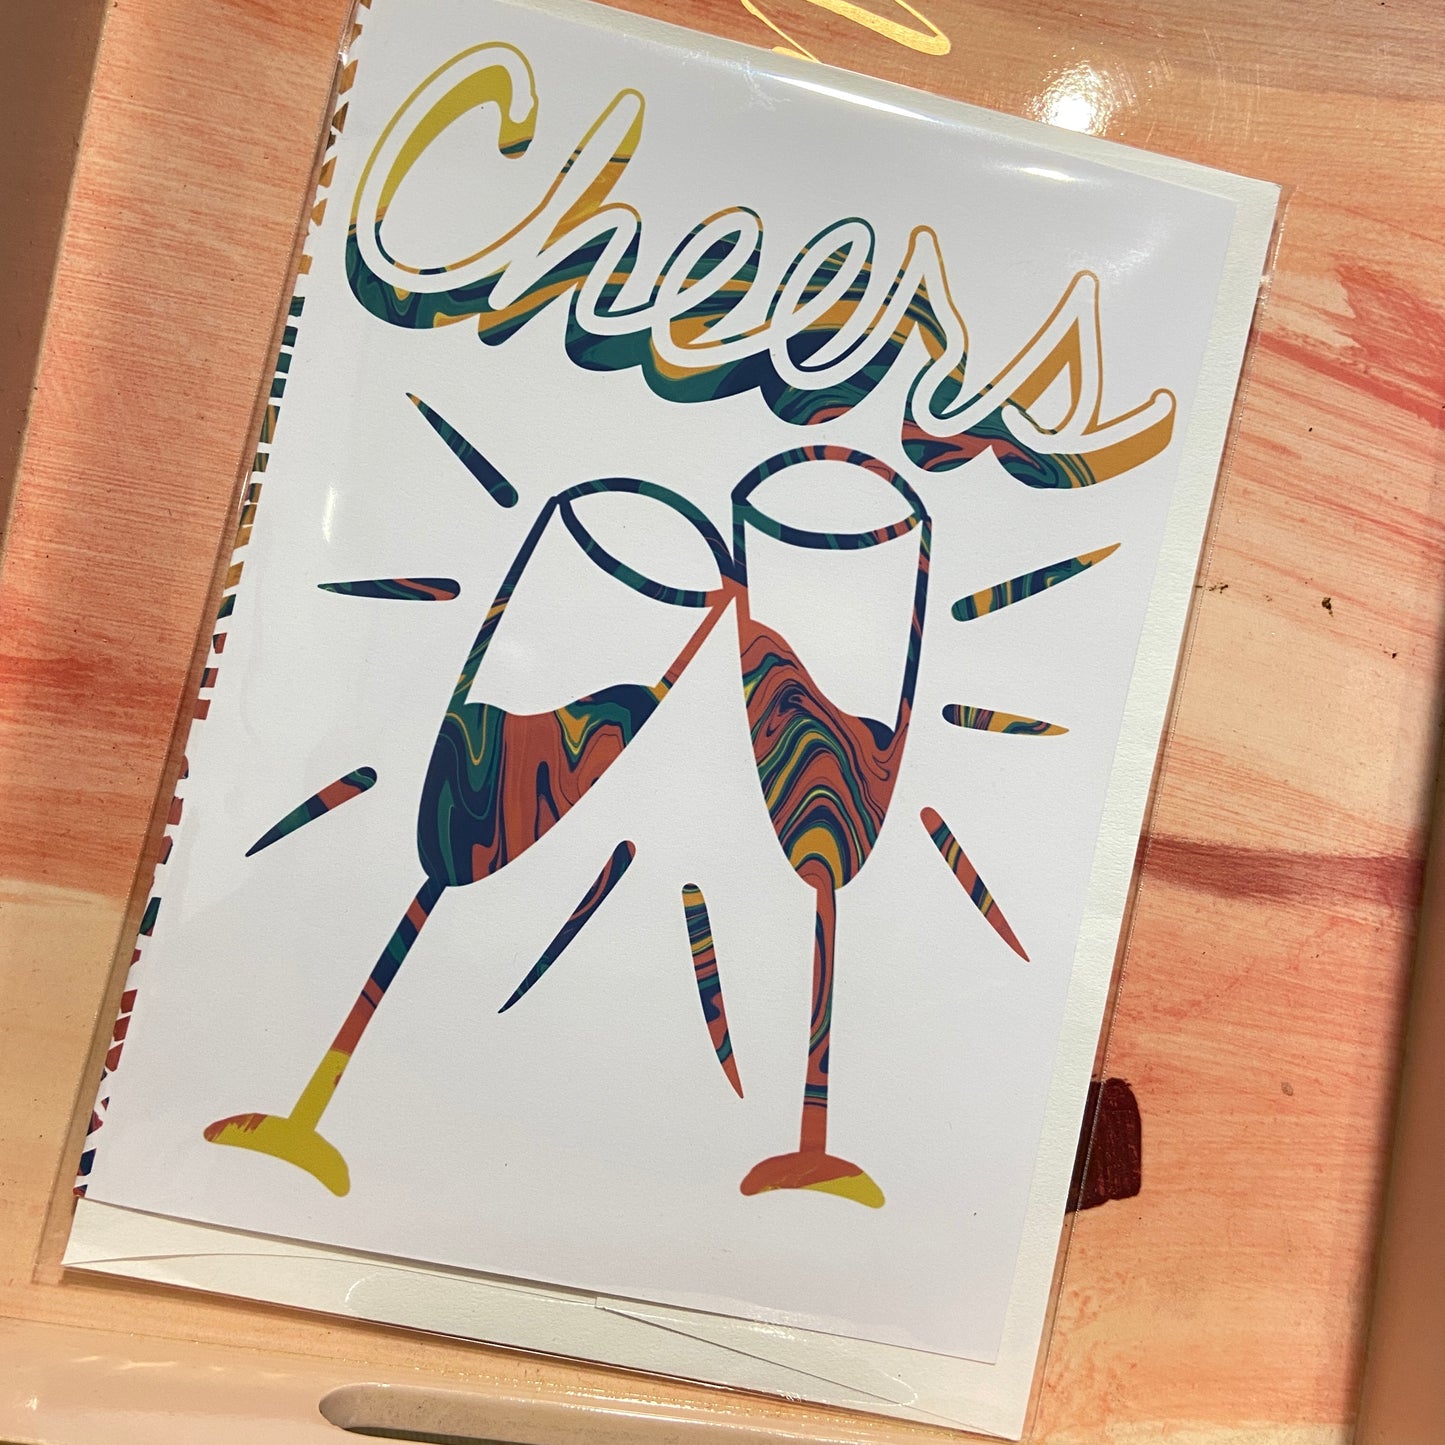 Cheers Toast Greeting Card by CReneeArt